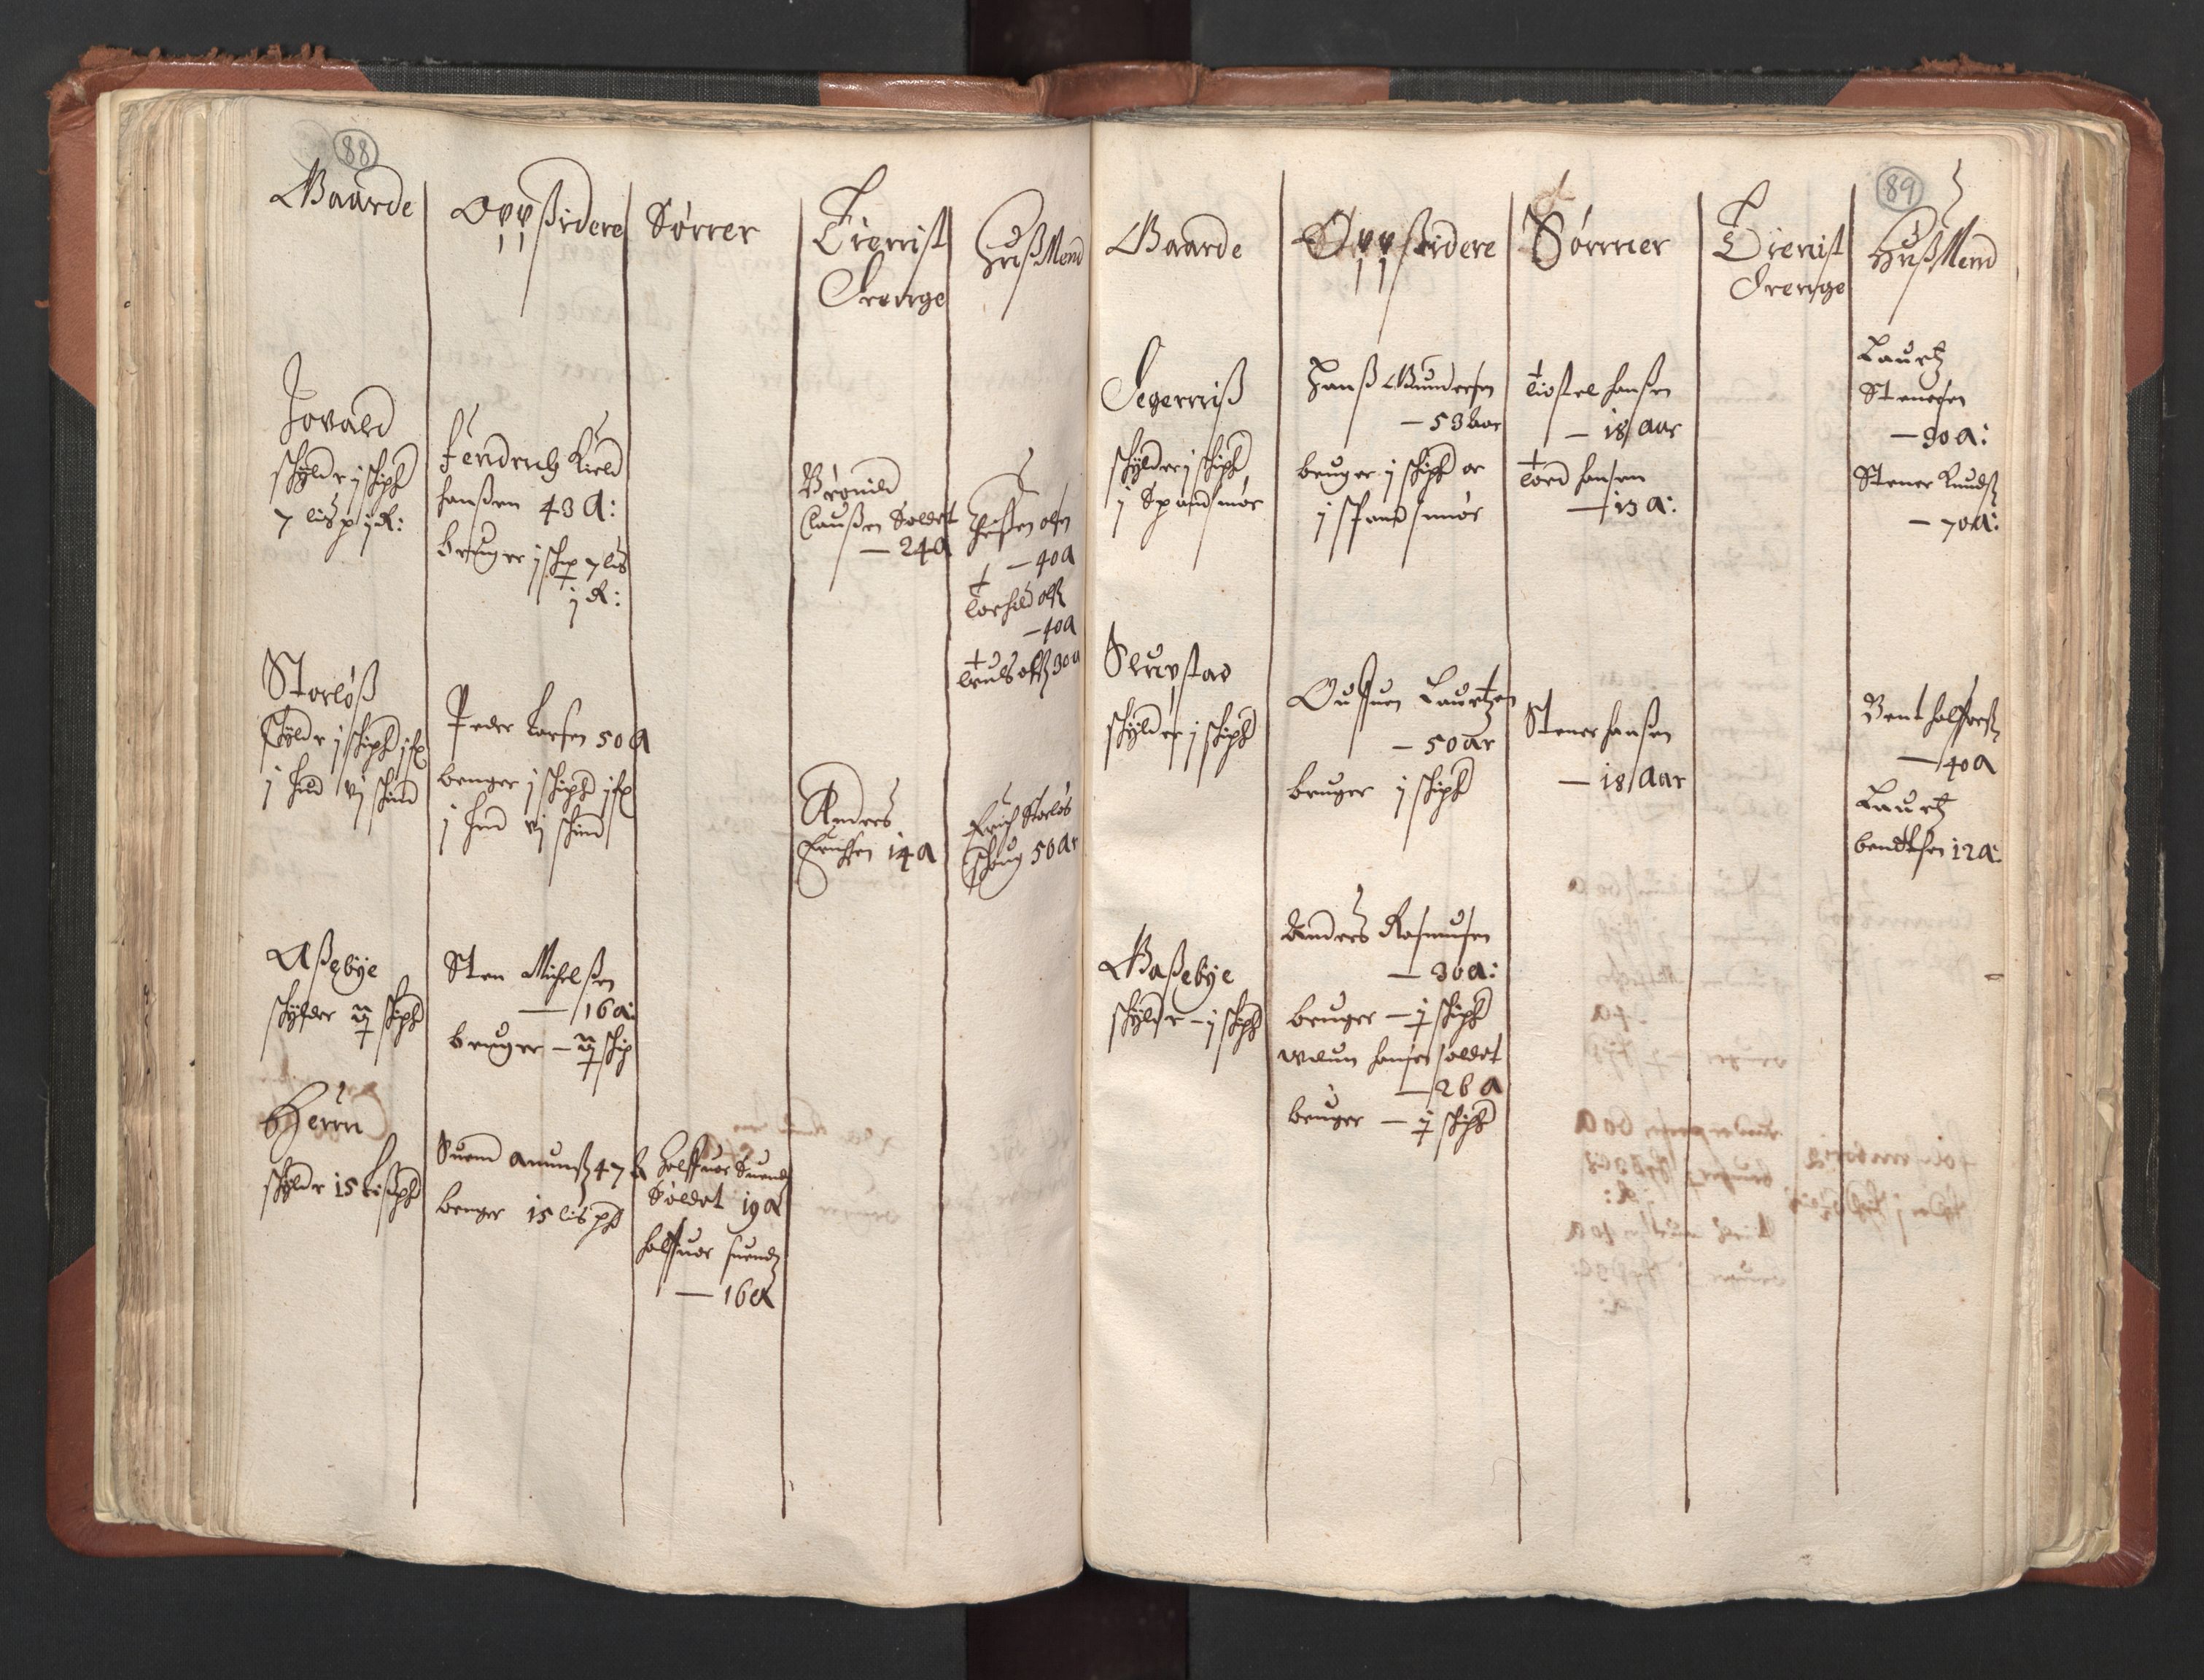 RA, Fogdenes og sorenskrivernes manntall 1664-1666, nr. 1: Fogderier (len og skipreider) i nåværende Østfold fylke, 1664, s. 88-89